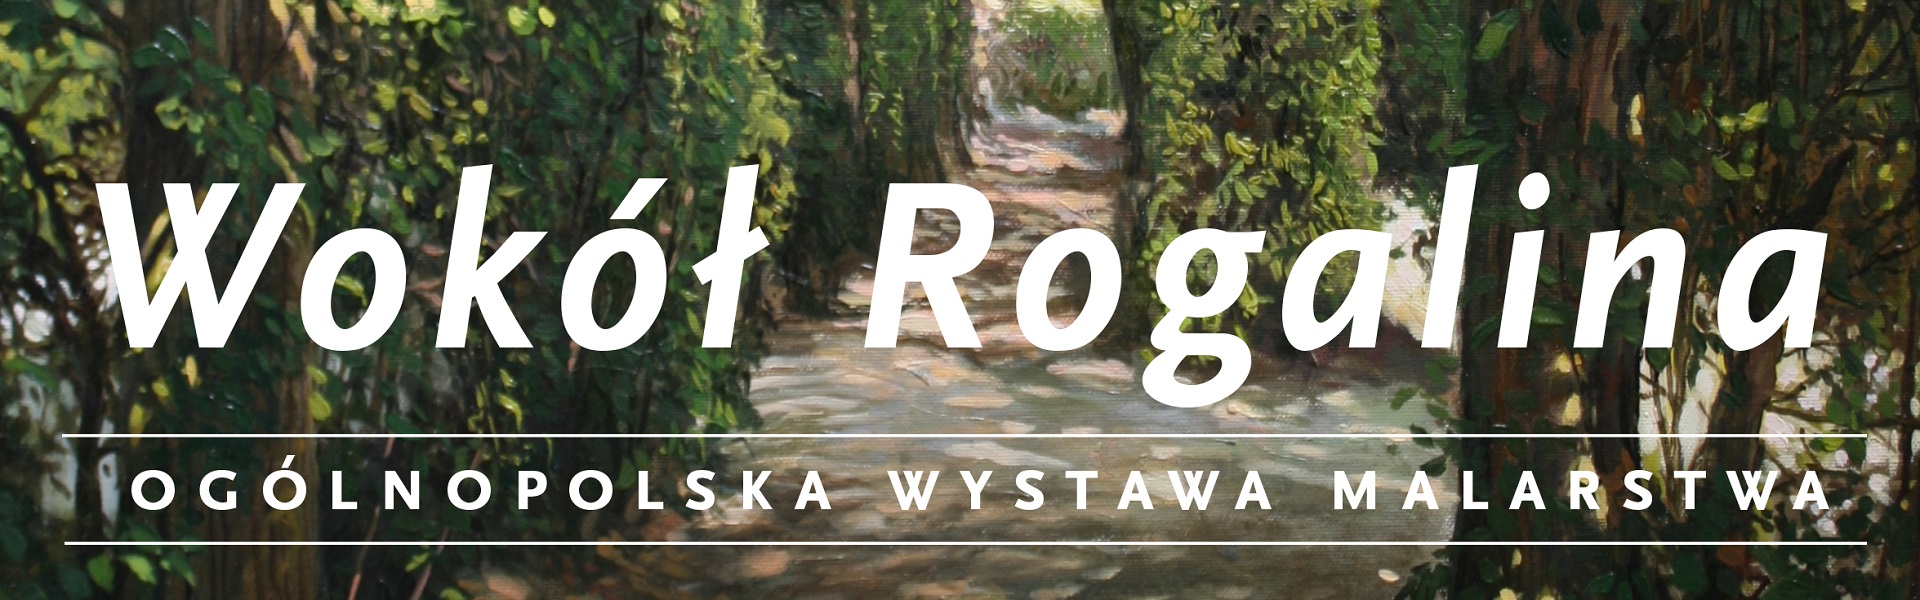 Banner Wystawa Wokół Rogalina